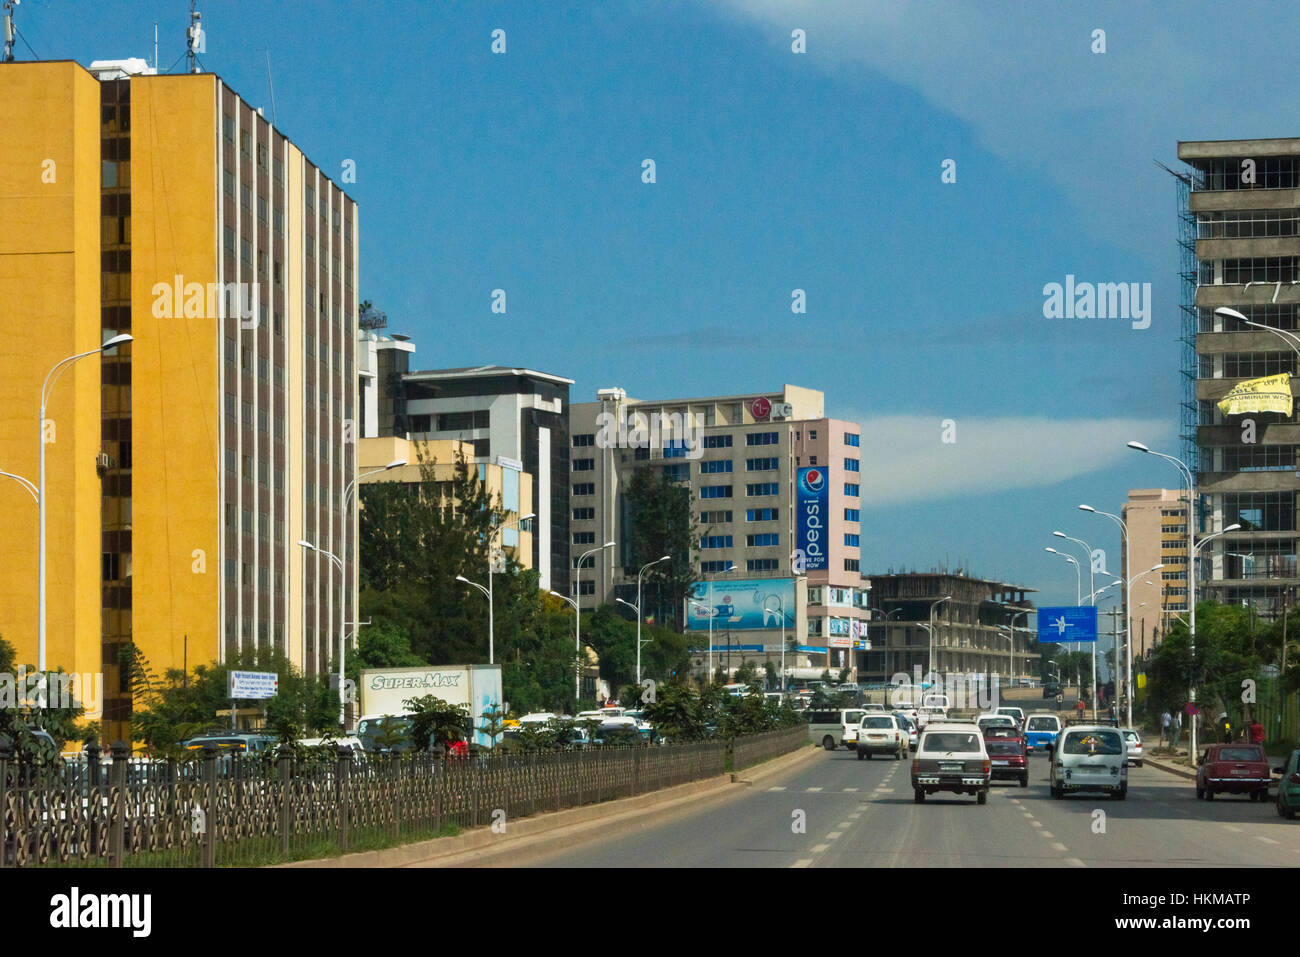 Downtown area in Addis Ababa, Ethiopia Stock Photo